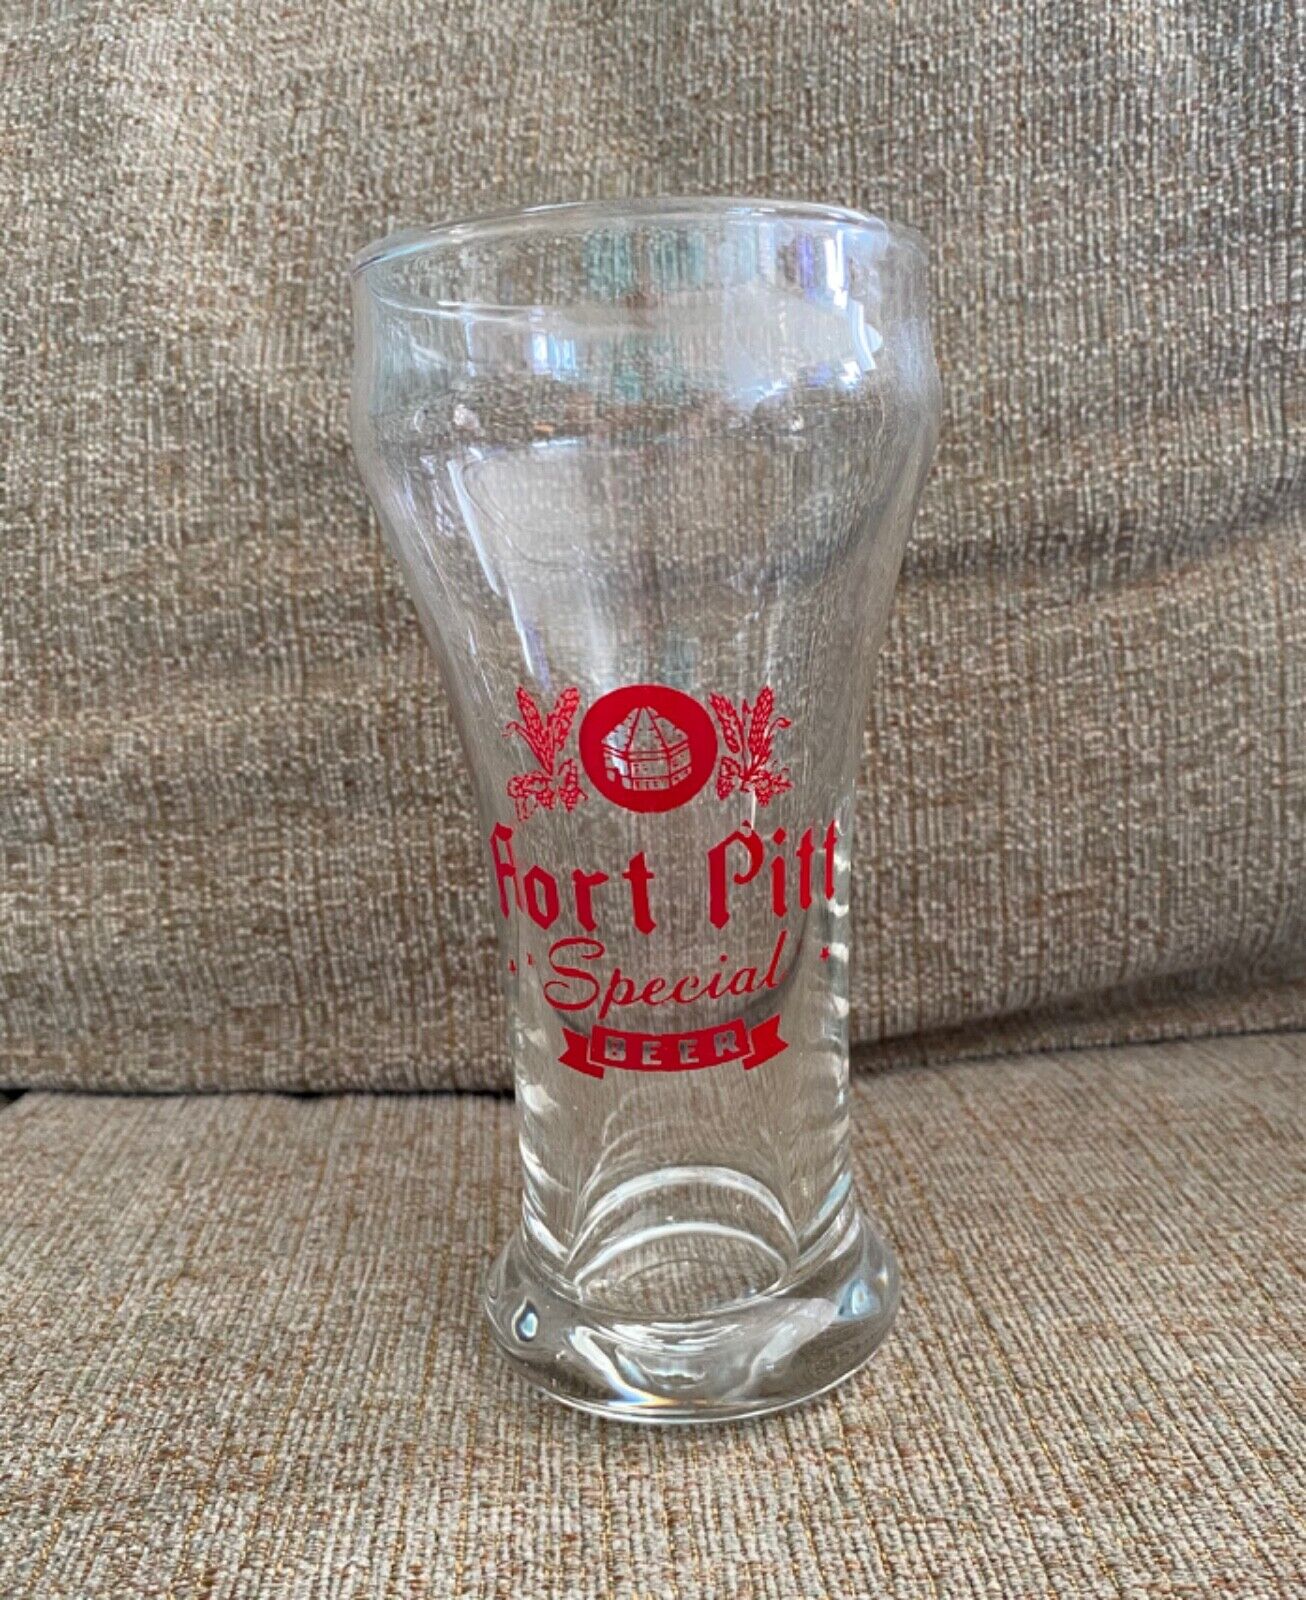 Fort Pitt Special Beer 6” Drinking Glass Pilsner